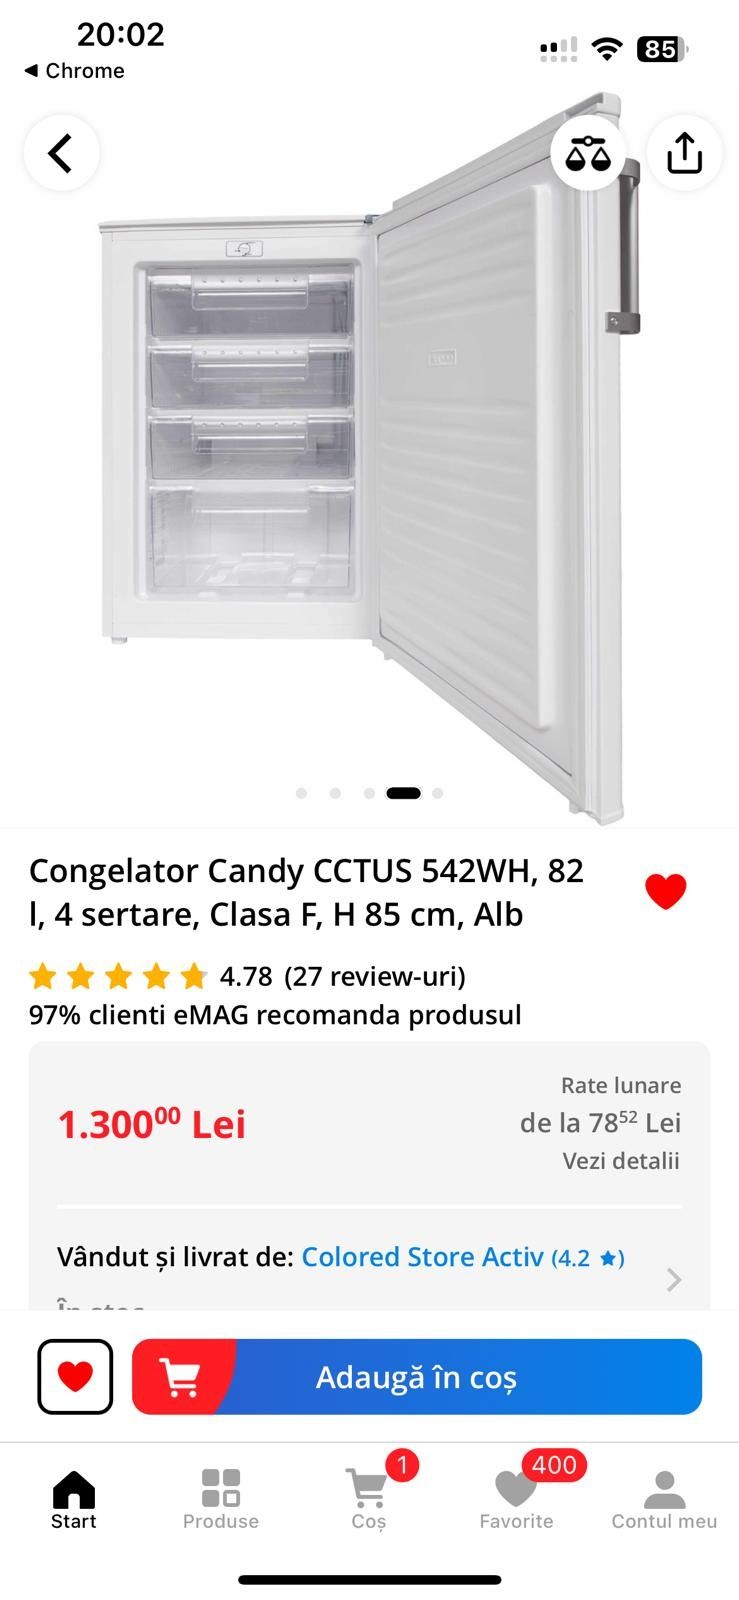 Congelator Candy